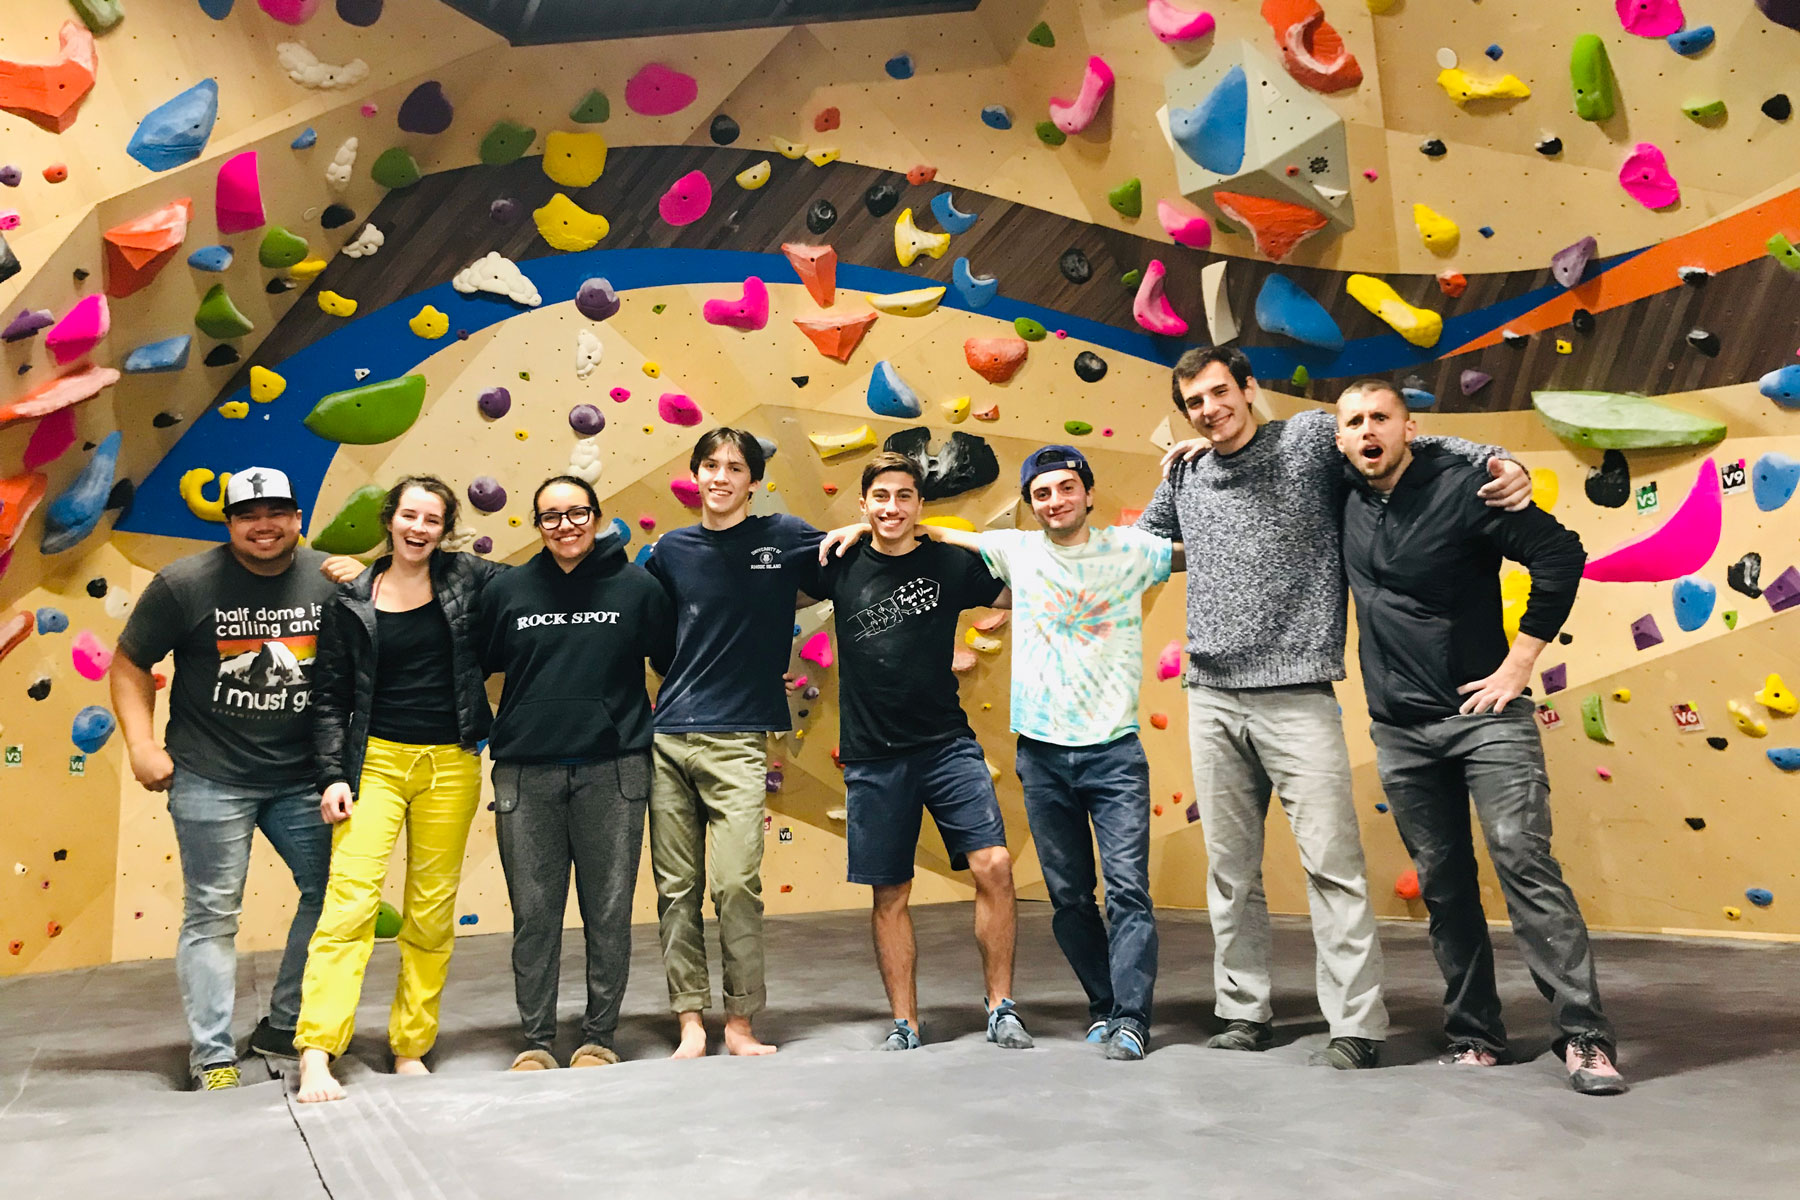 Sancianco climbing with Rock Spot staff members